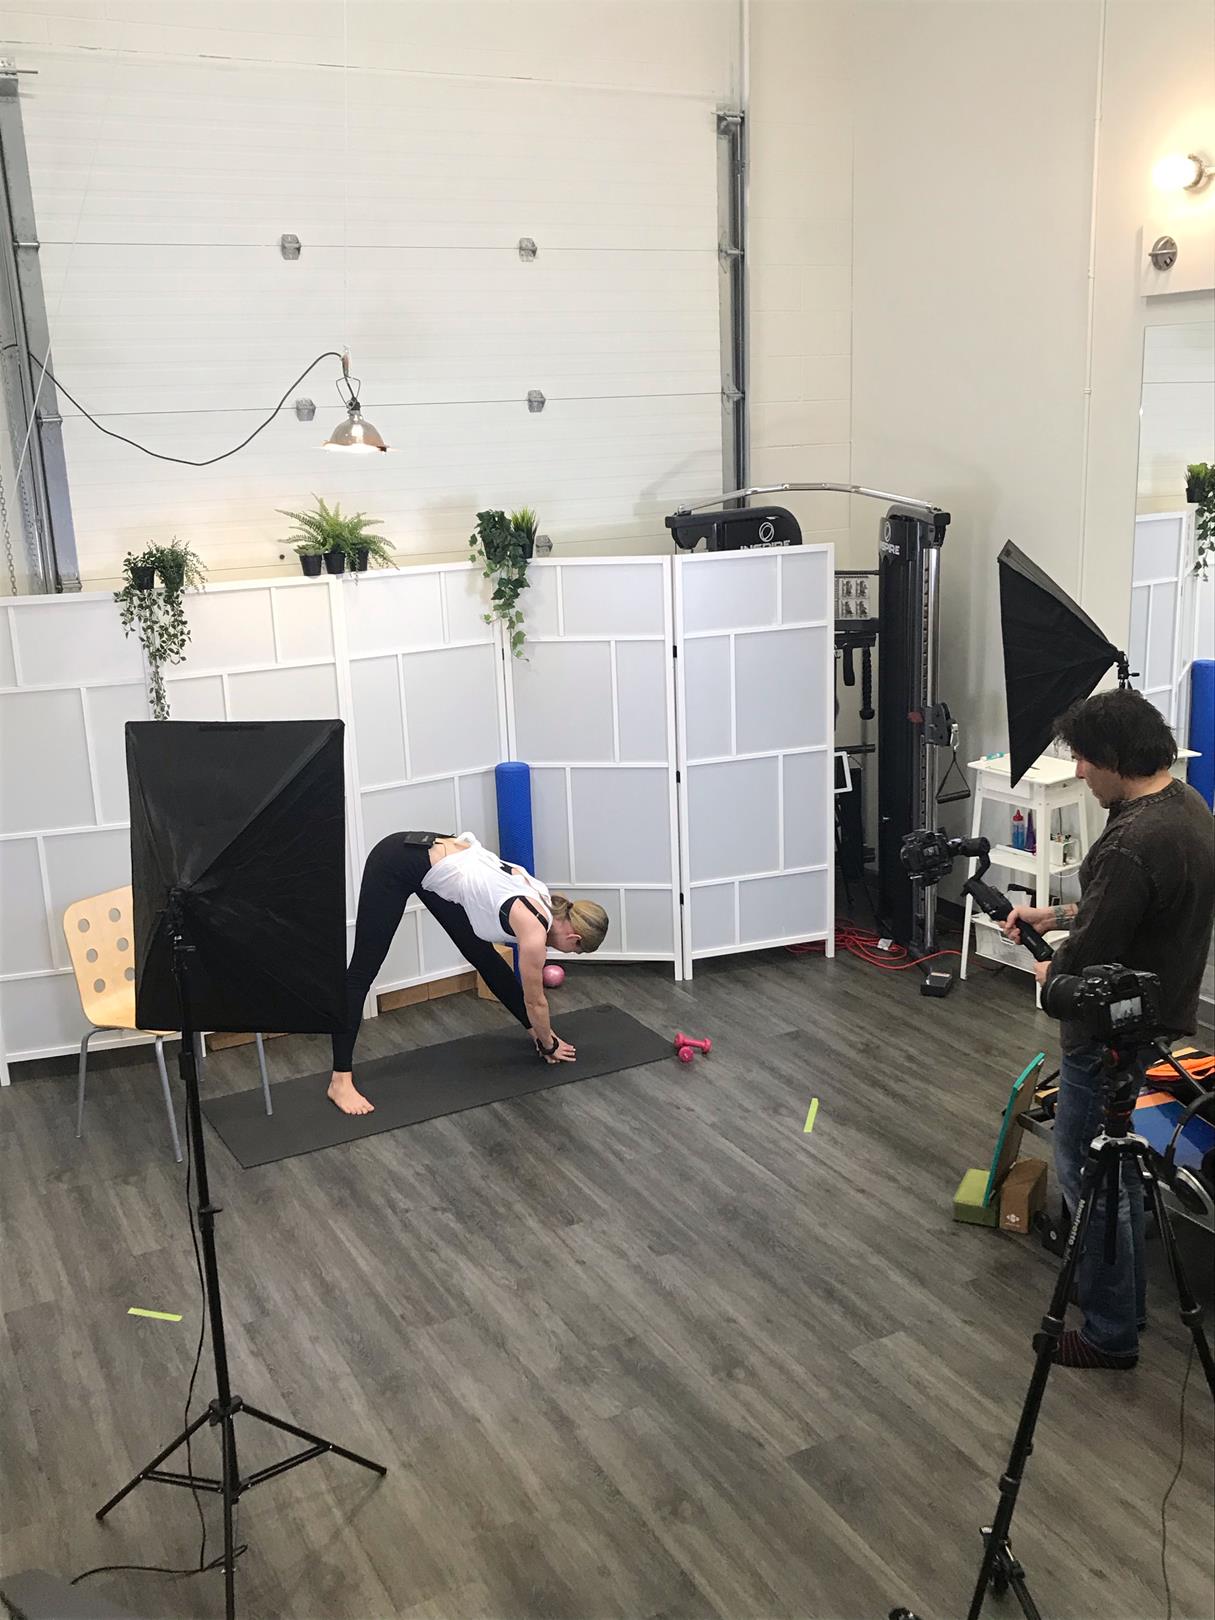 Cameras filming woman exercising